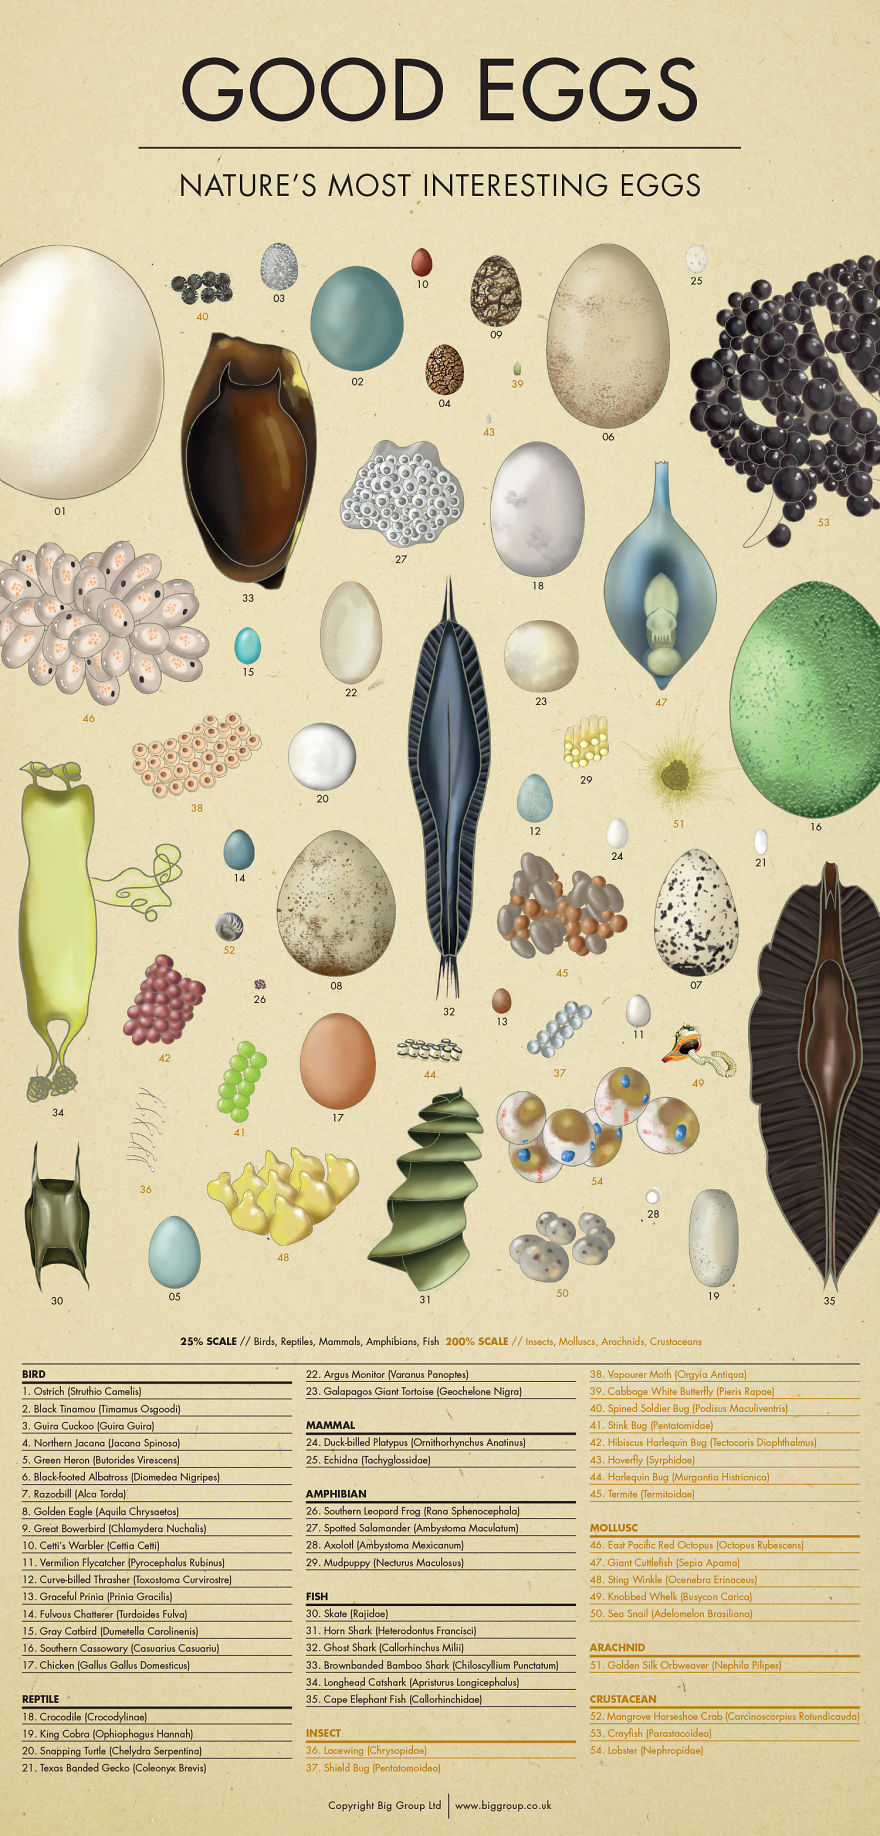 Good Eggs - Nature's Most Interesting Eggs